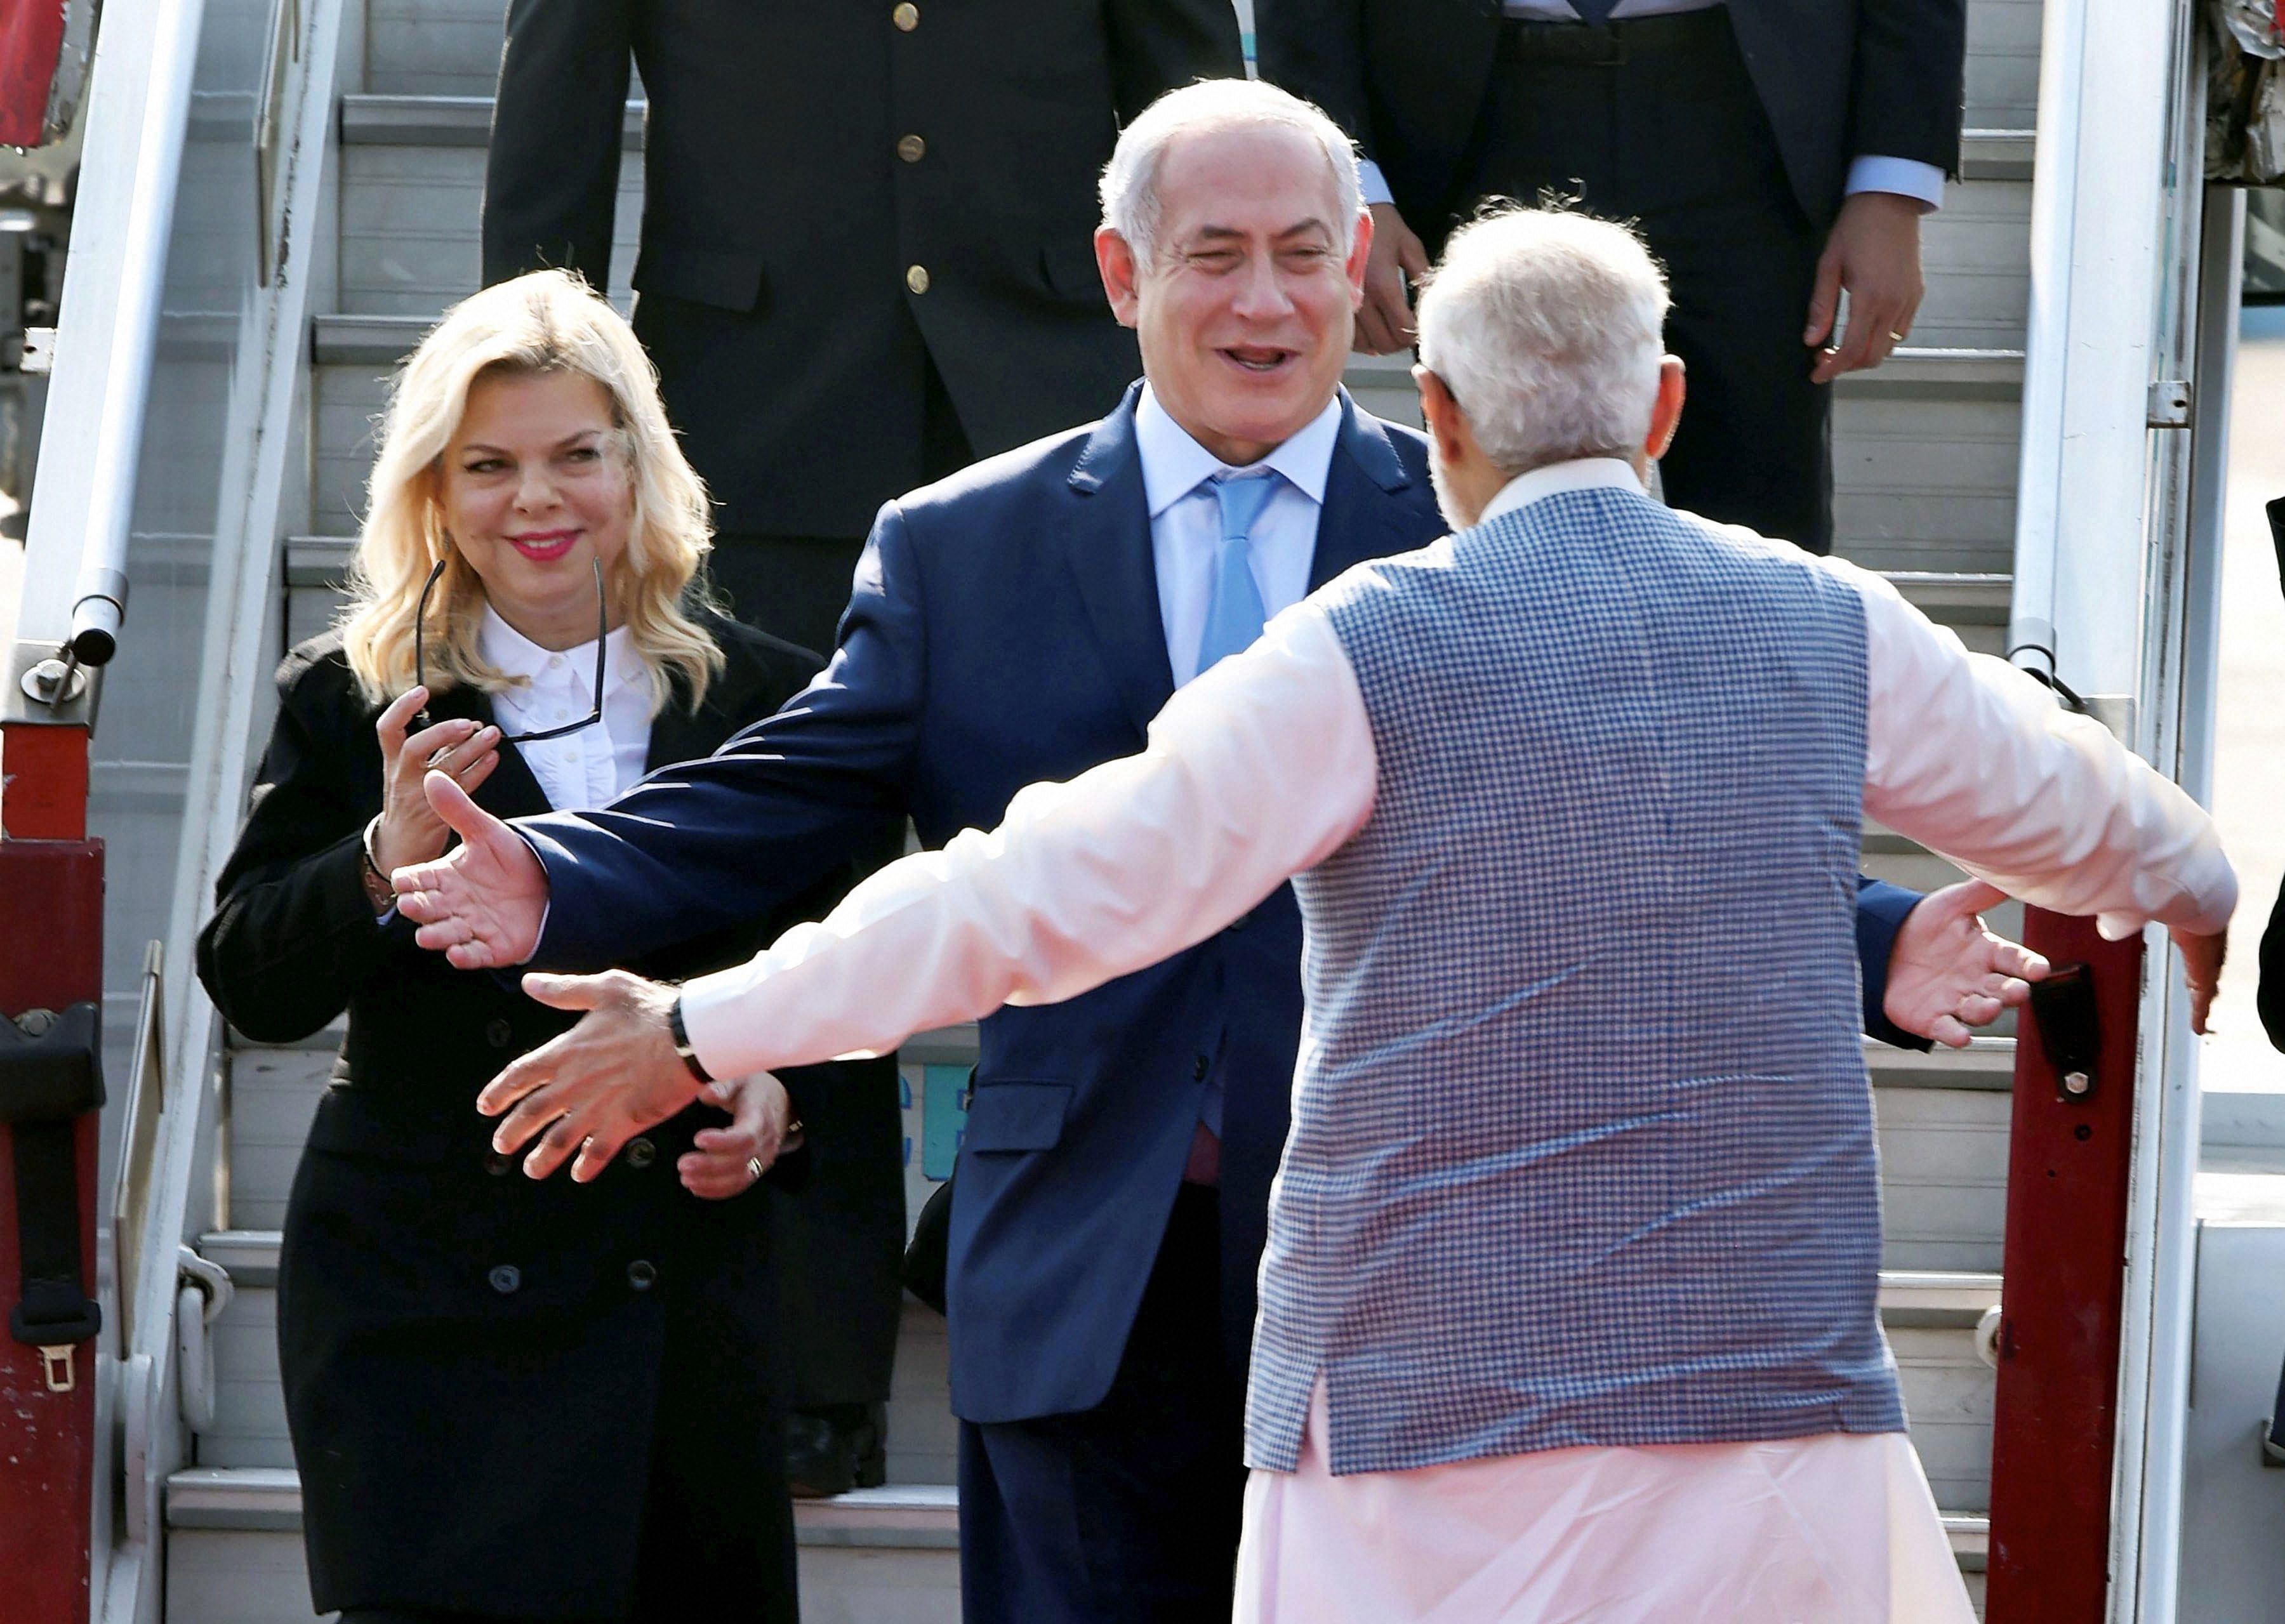 PM Modi and Israel PM Netanyahu. Credit: PTI Photo